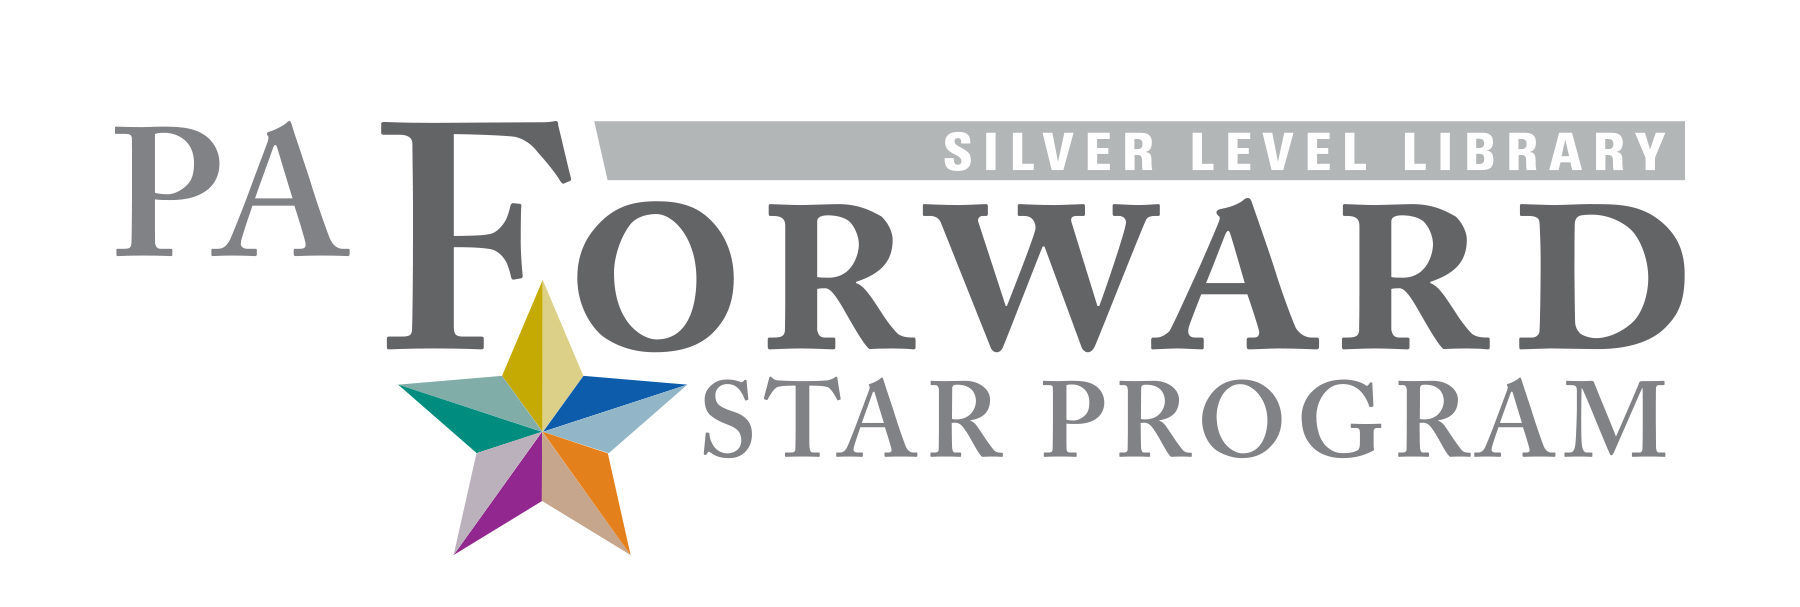 PA Forward Star Program, Silver Level Library